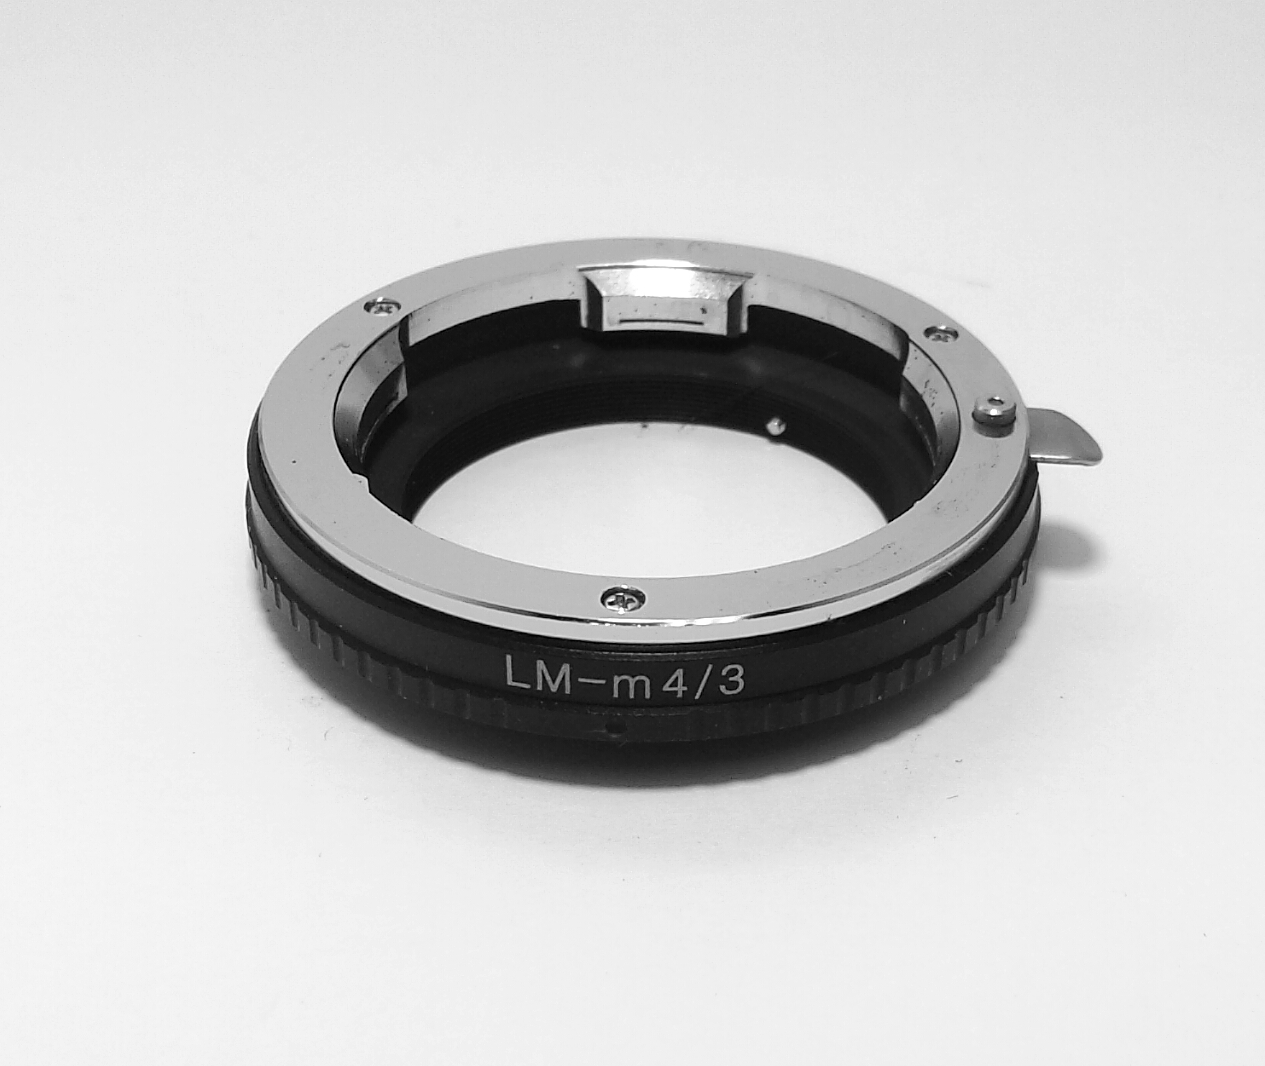 Leica `M` lens to Mirco 4/3 camera body adapter